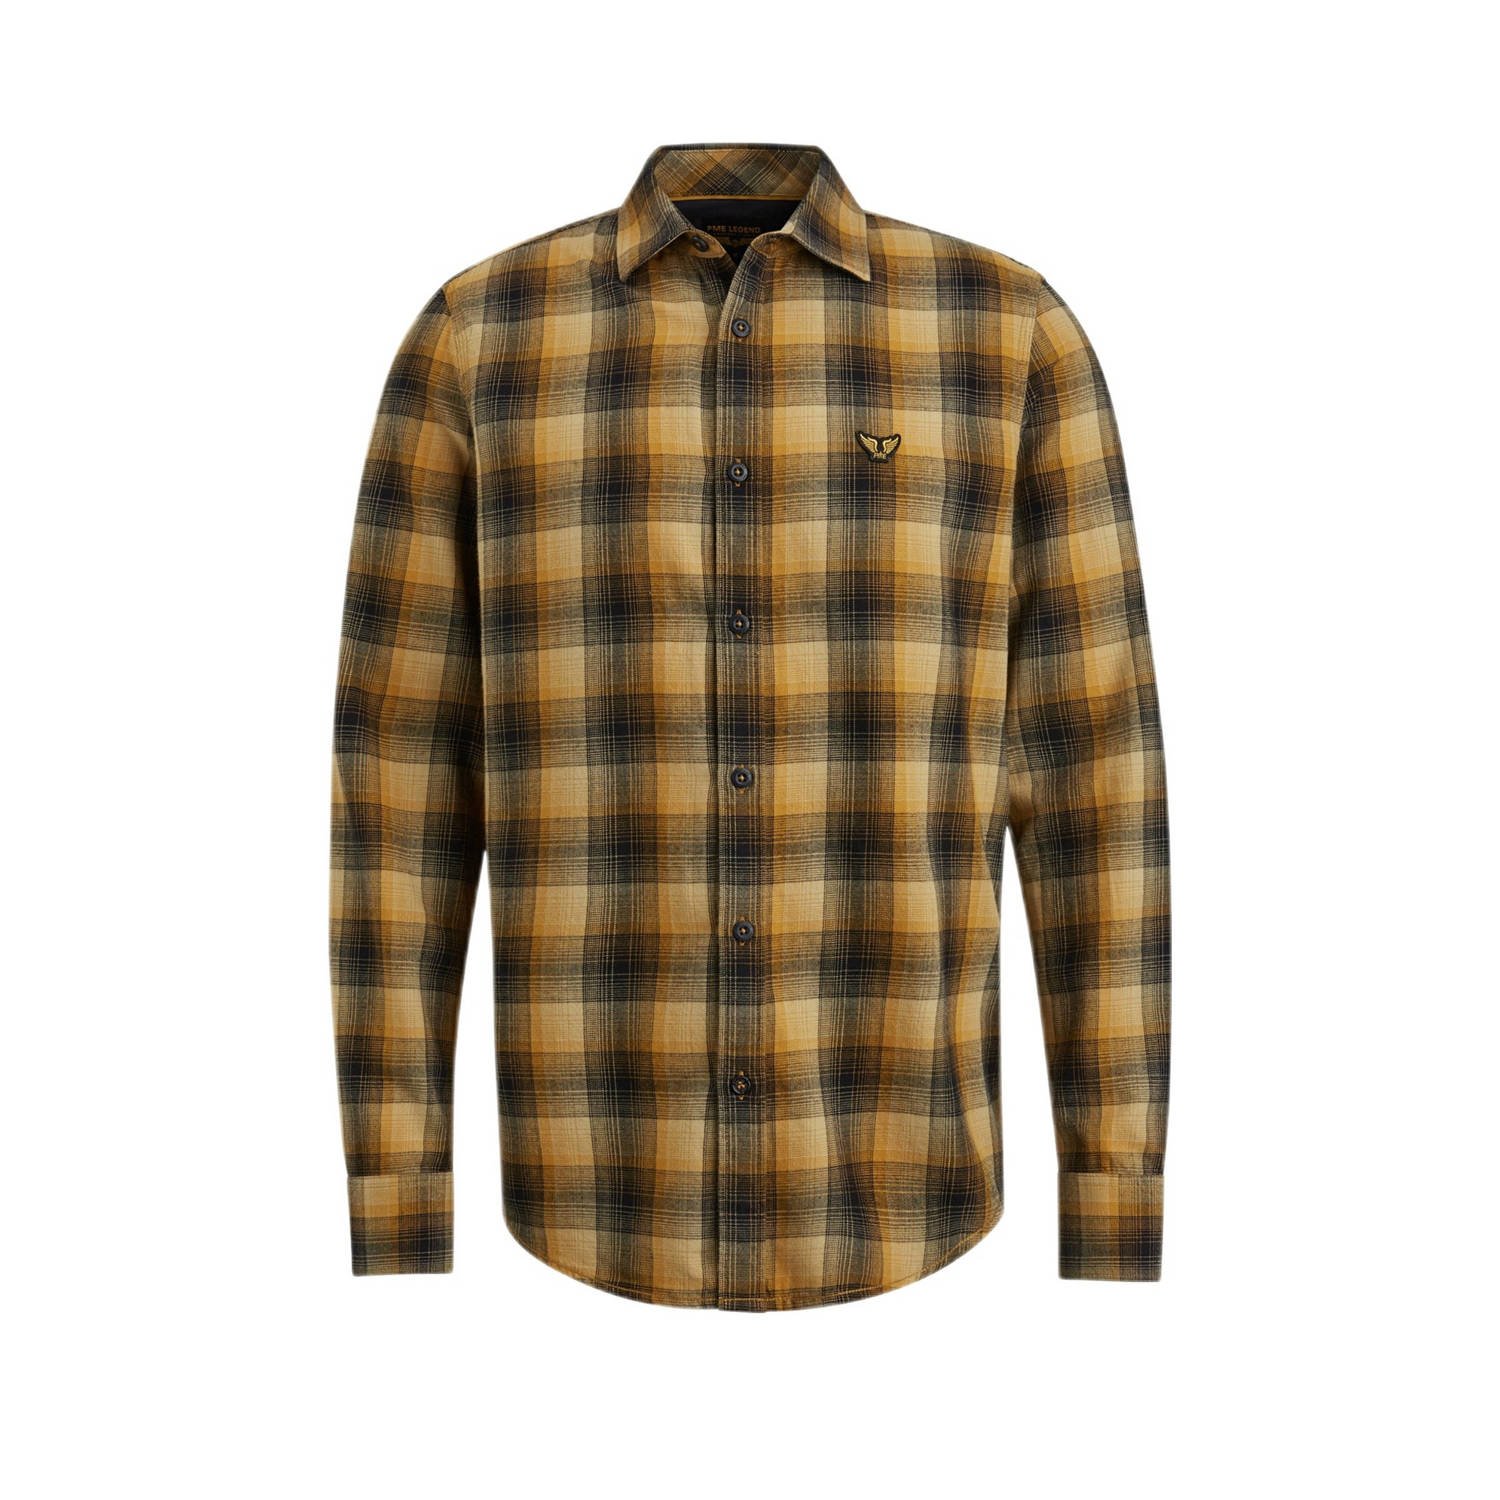 PME Legend geruit regular fit overhemd bruin geel